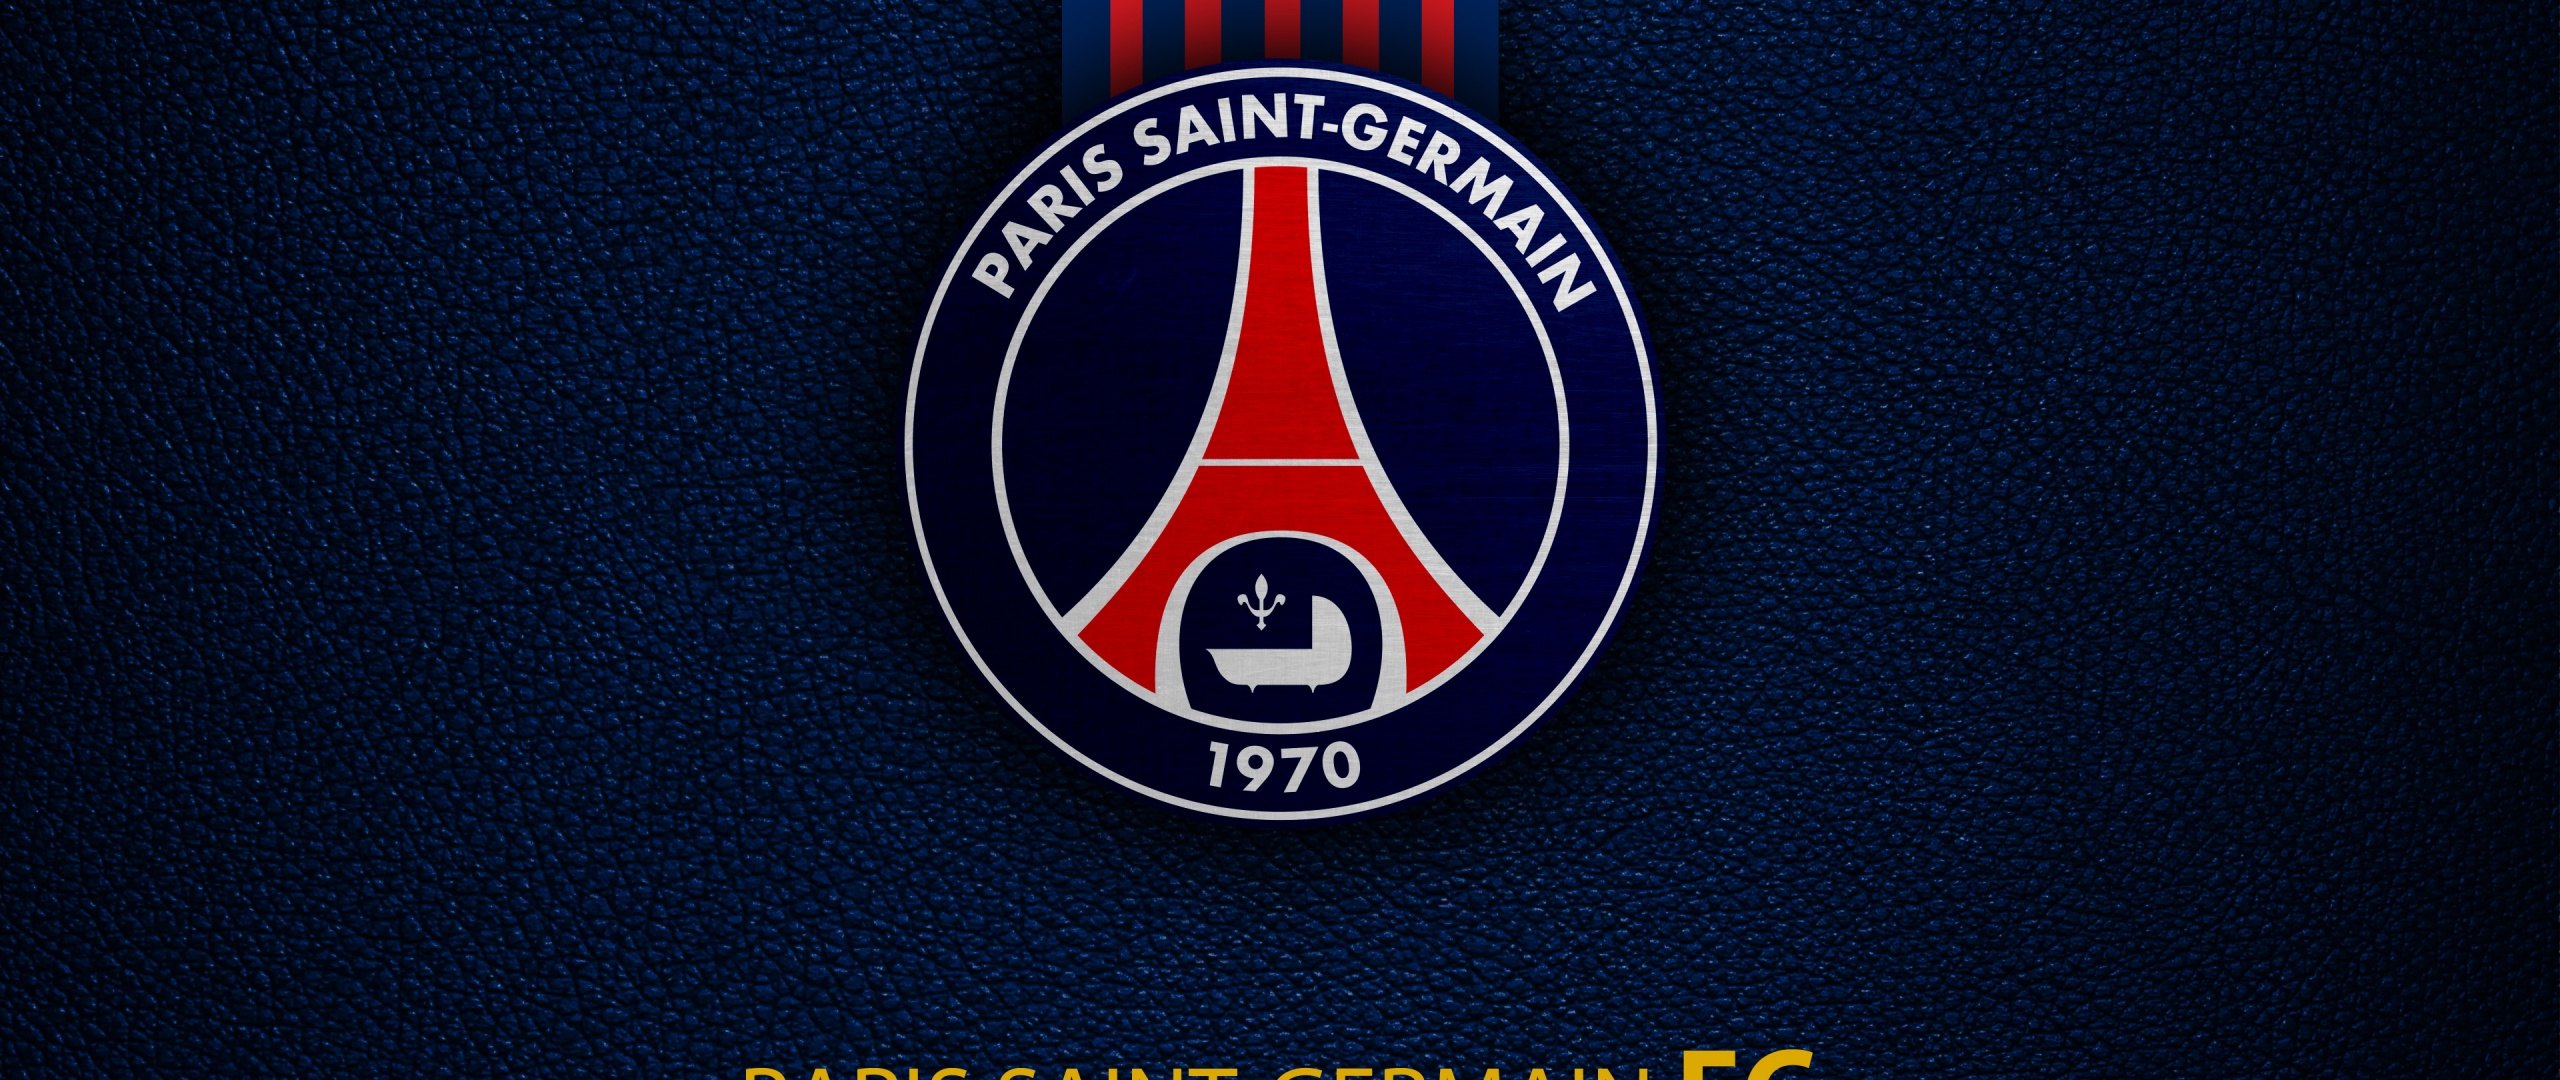 Paris Saint-Germain Wallpaper 4K, Football team, Logo, Dark blue